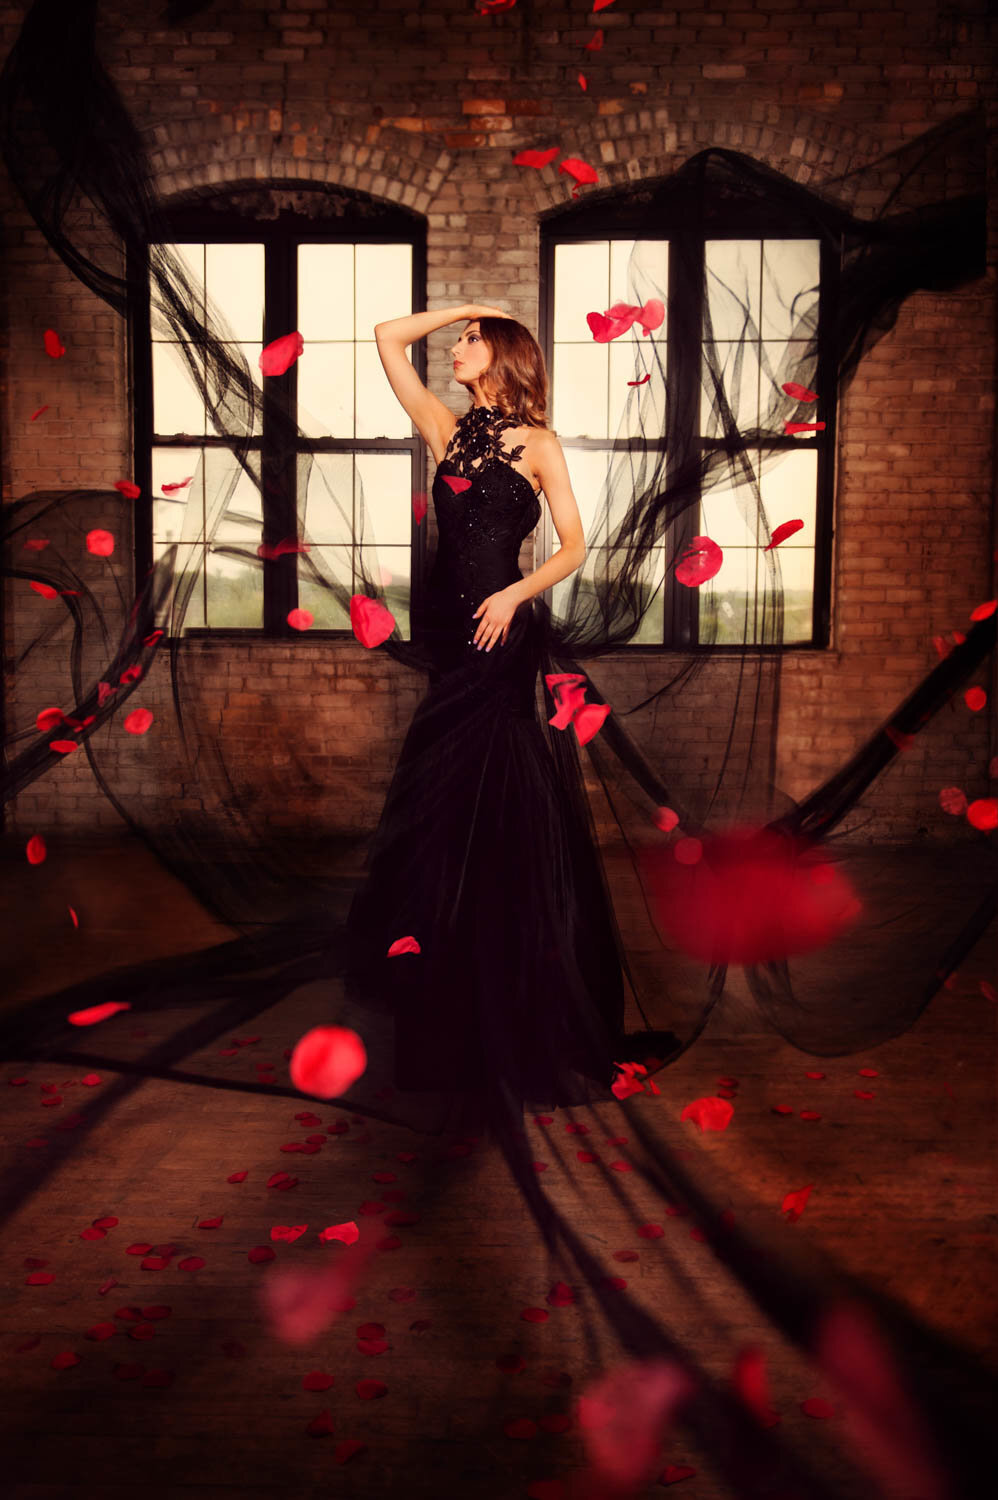 senior girl in formal black dress with rose petals in a studio